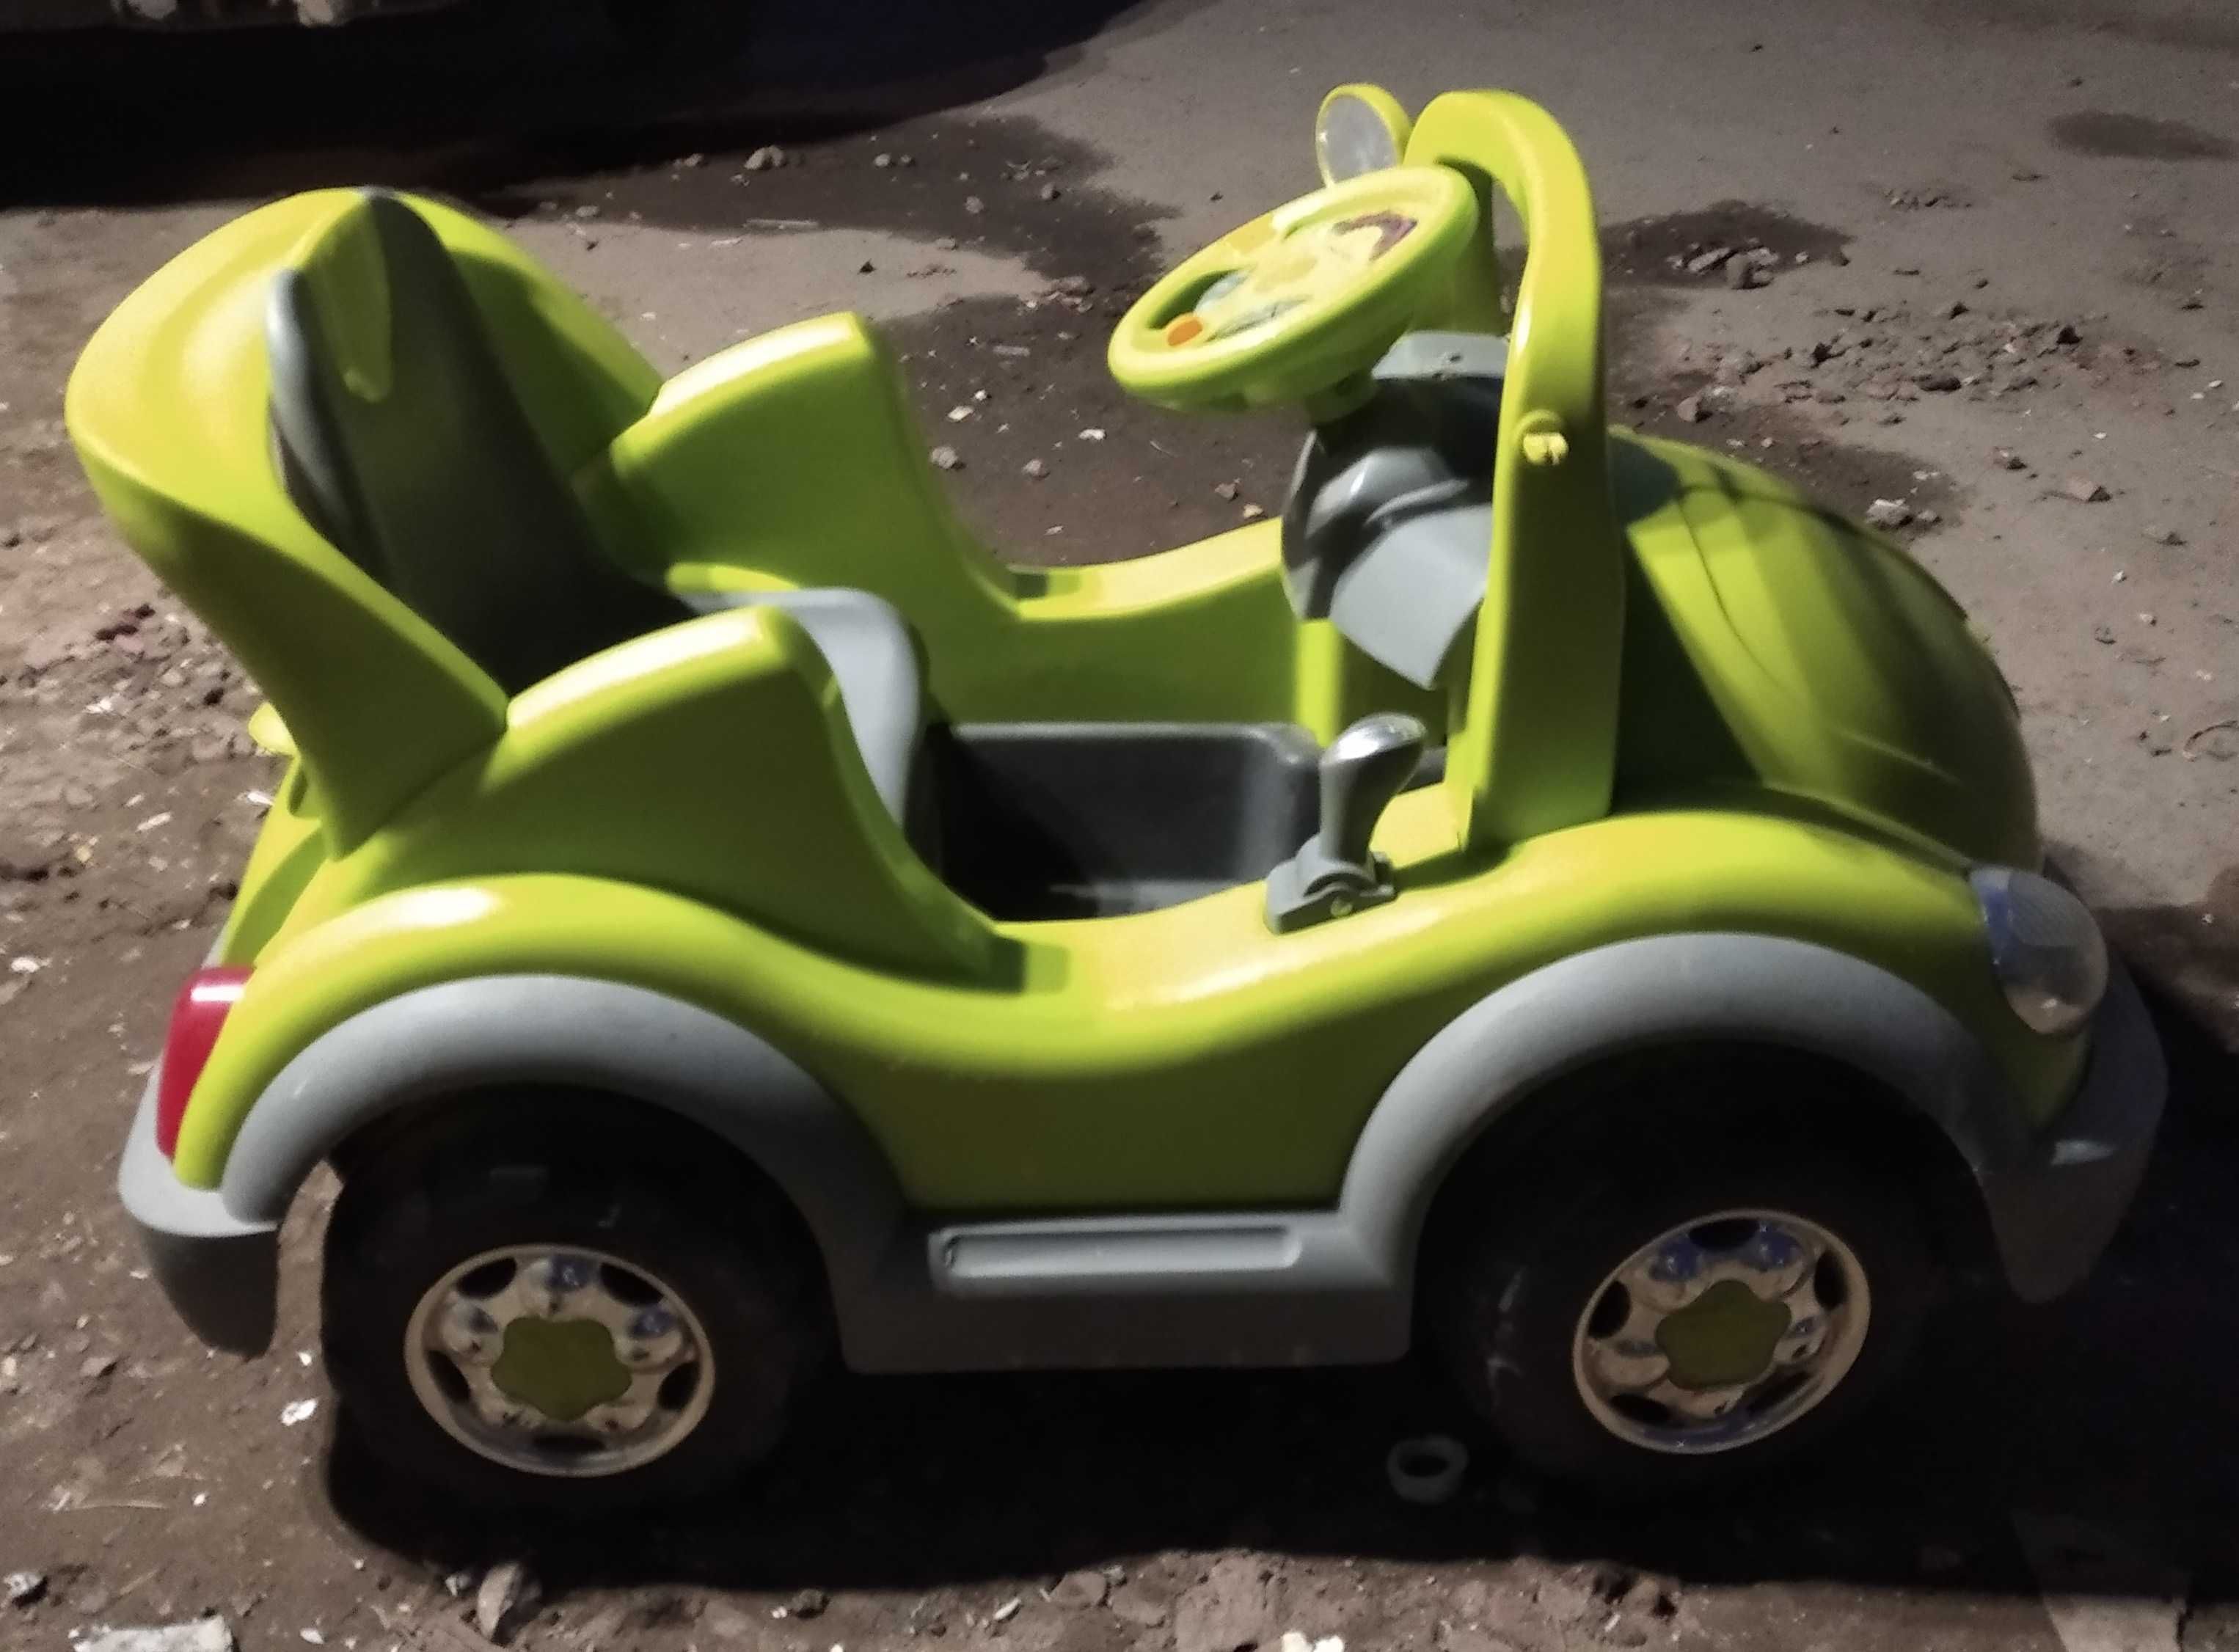 Детский электромобиль Volkswagen Beetle (фольксваген жук)